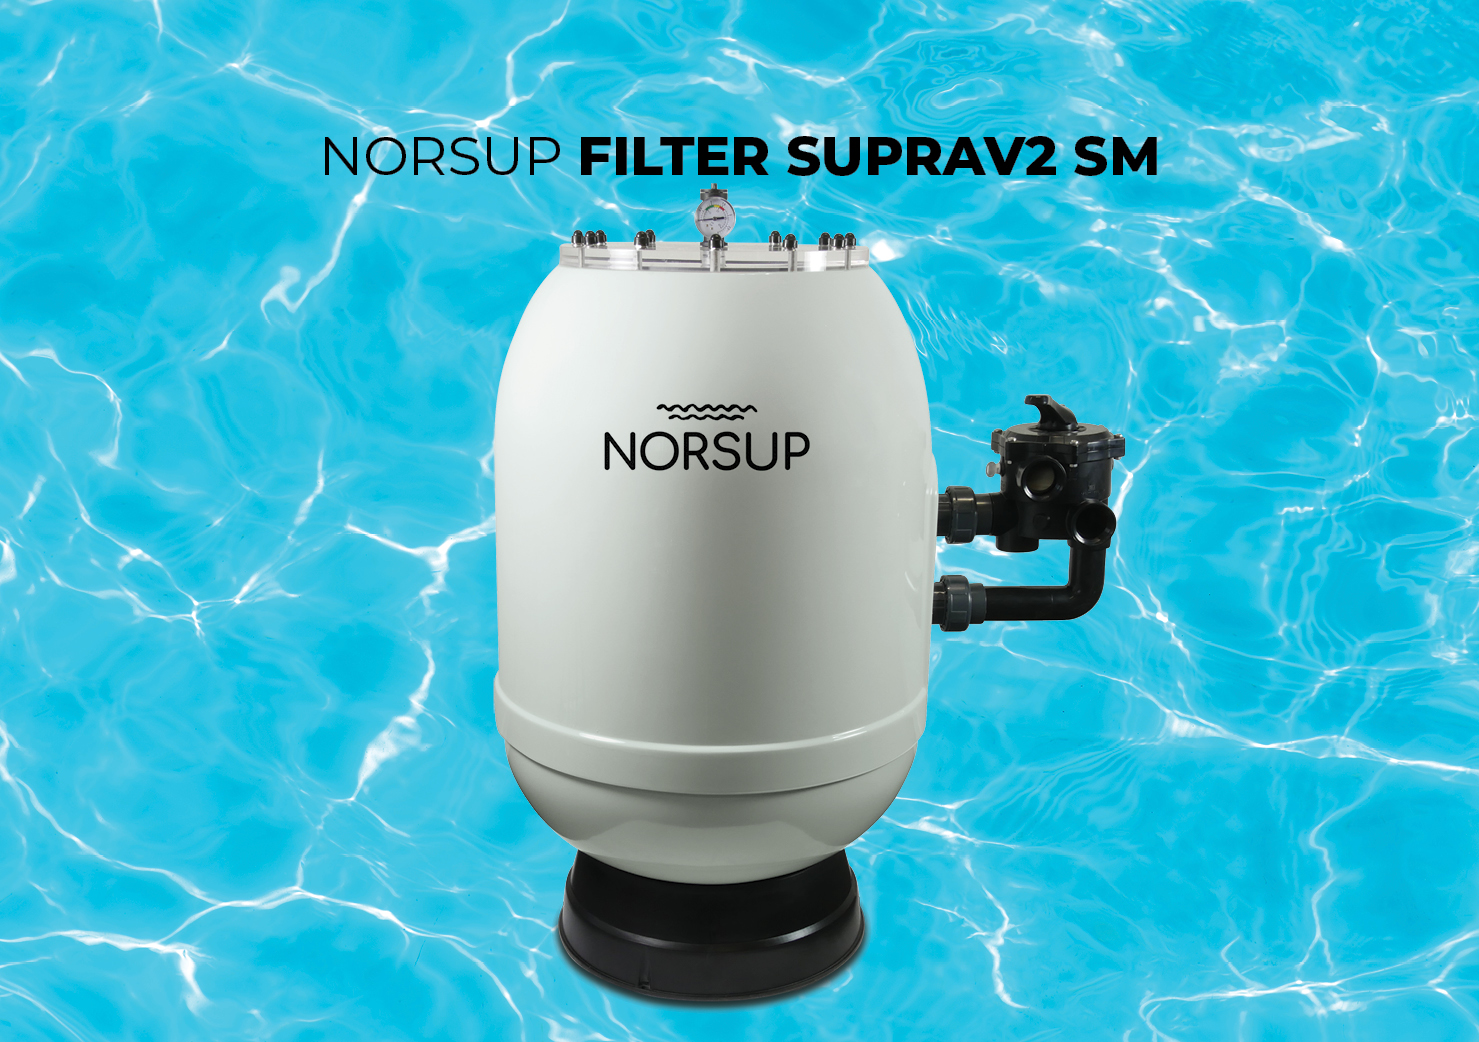 Norsup filter SupraV2 SM